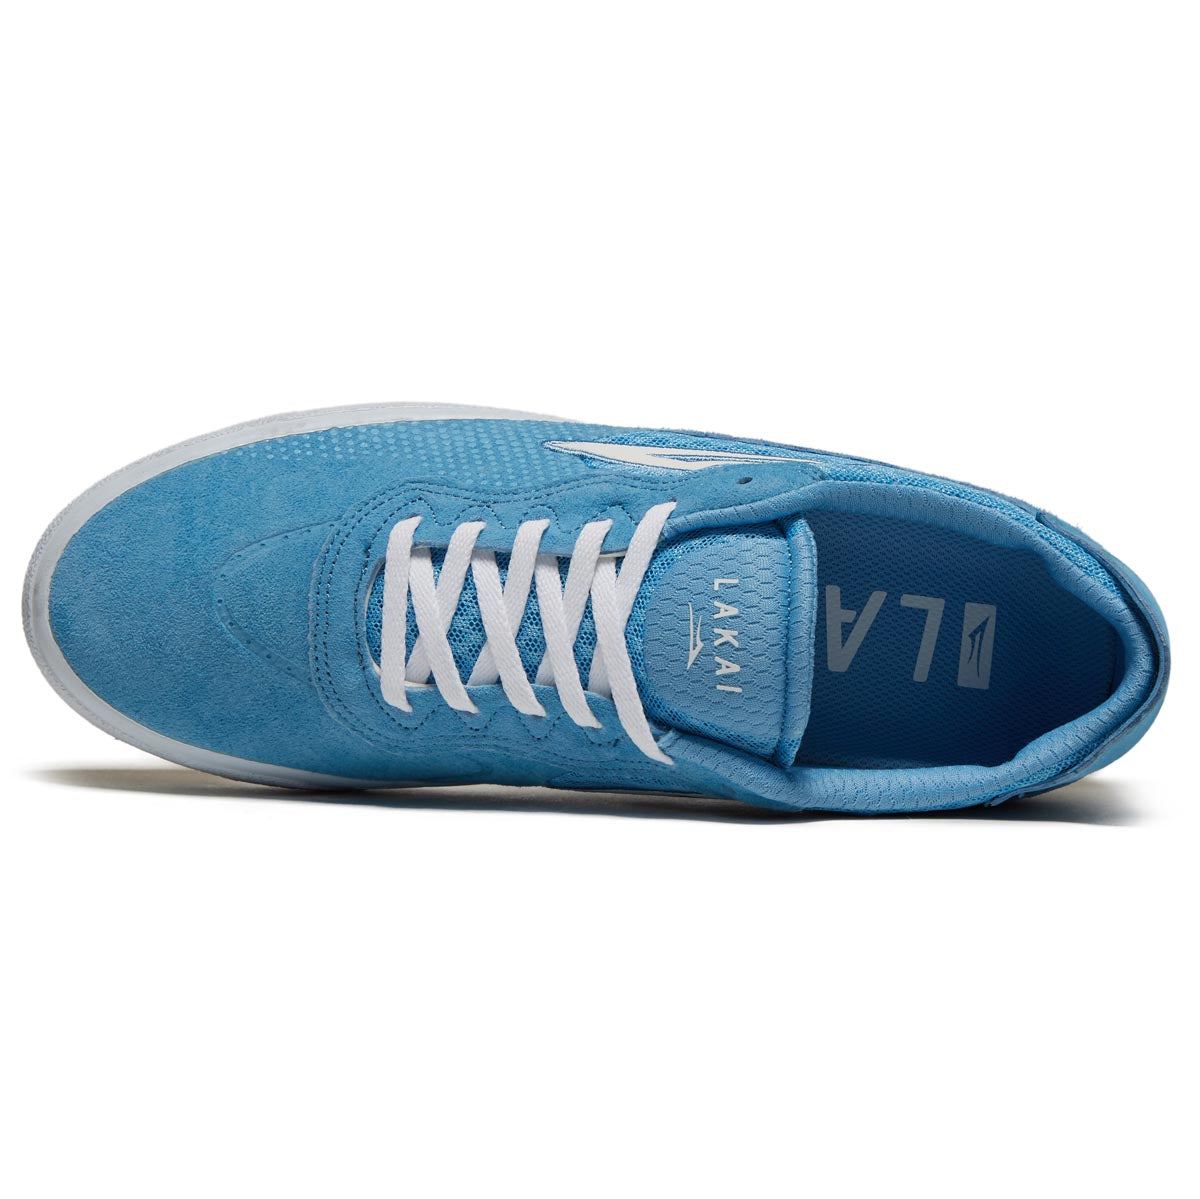 Lakai Essex Shoes - Light Blue Suede image 3